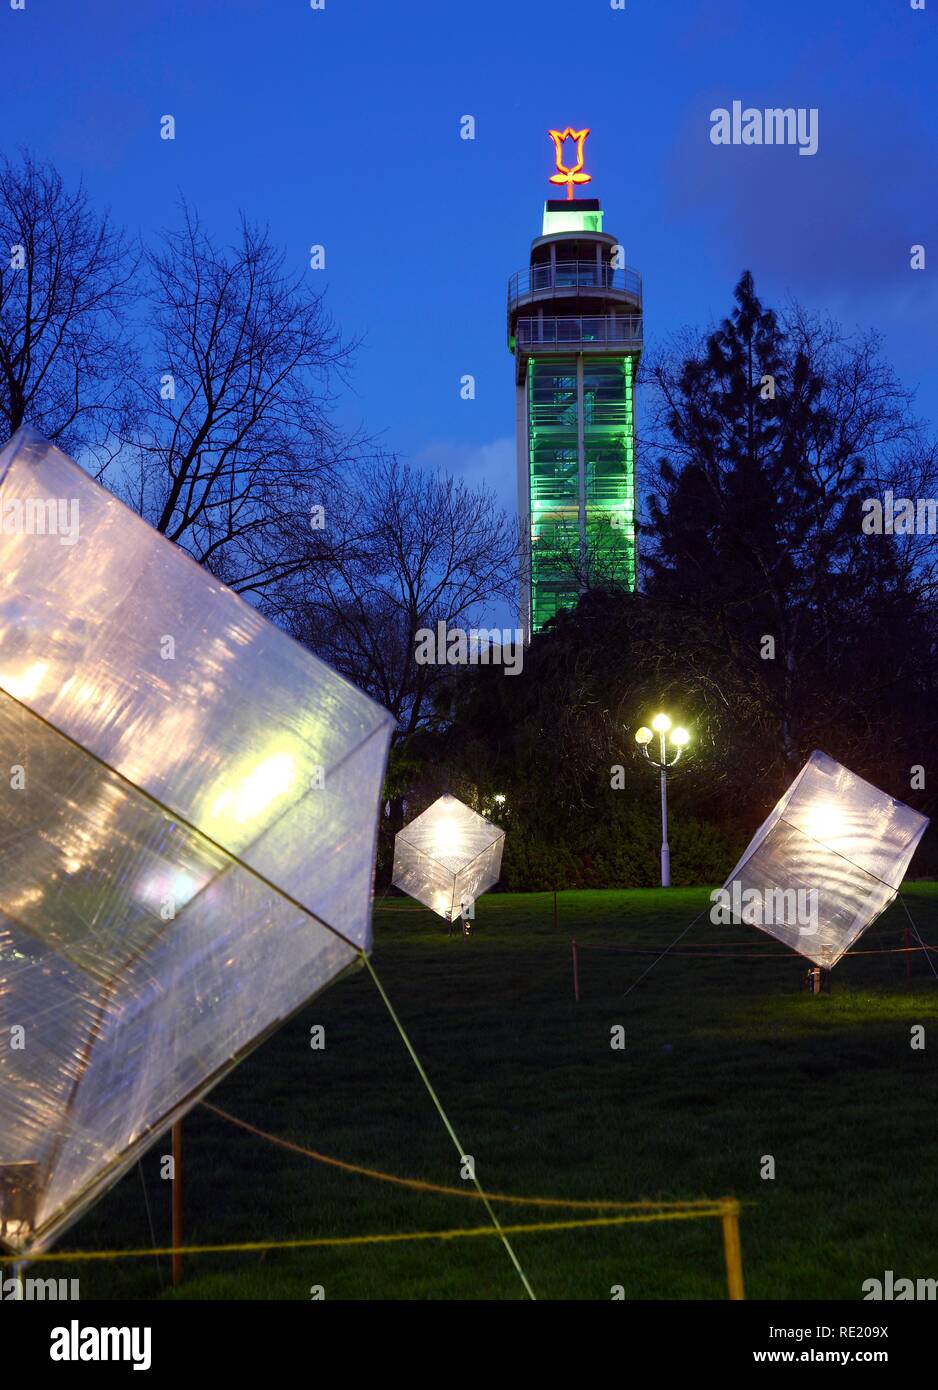 Illuminated works of art in an artistic lights installation, Gruga Park, Essen, North Rhine-Westphalia Germany, Europe Stock Photo